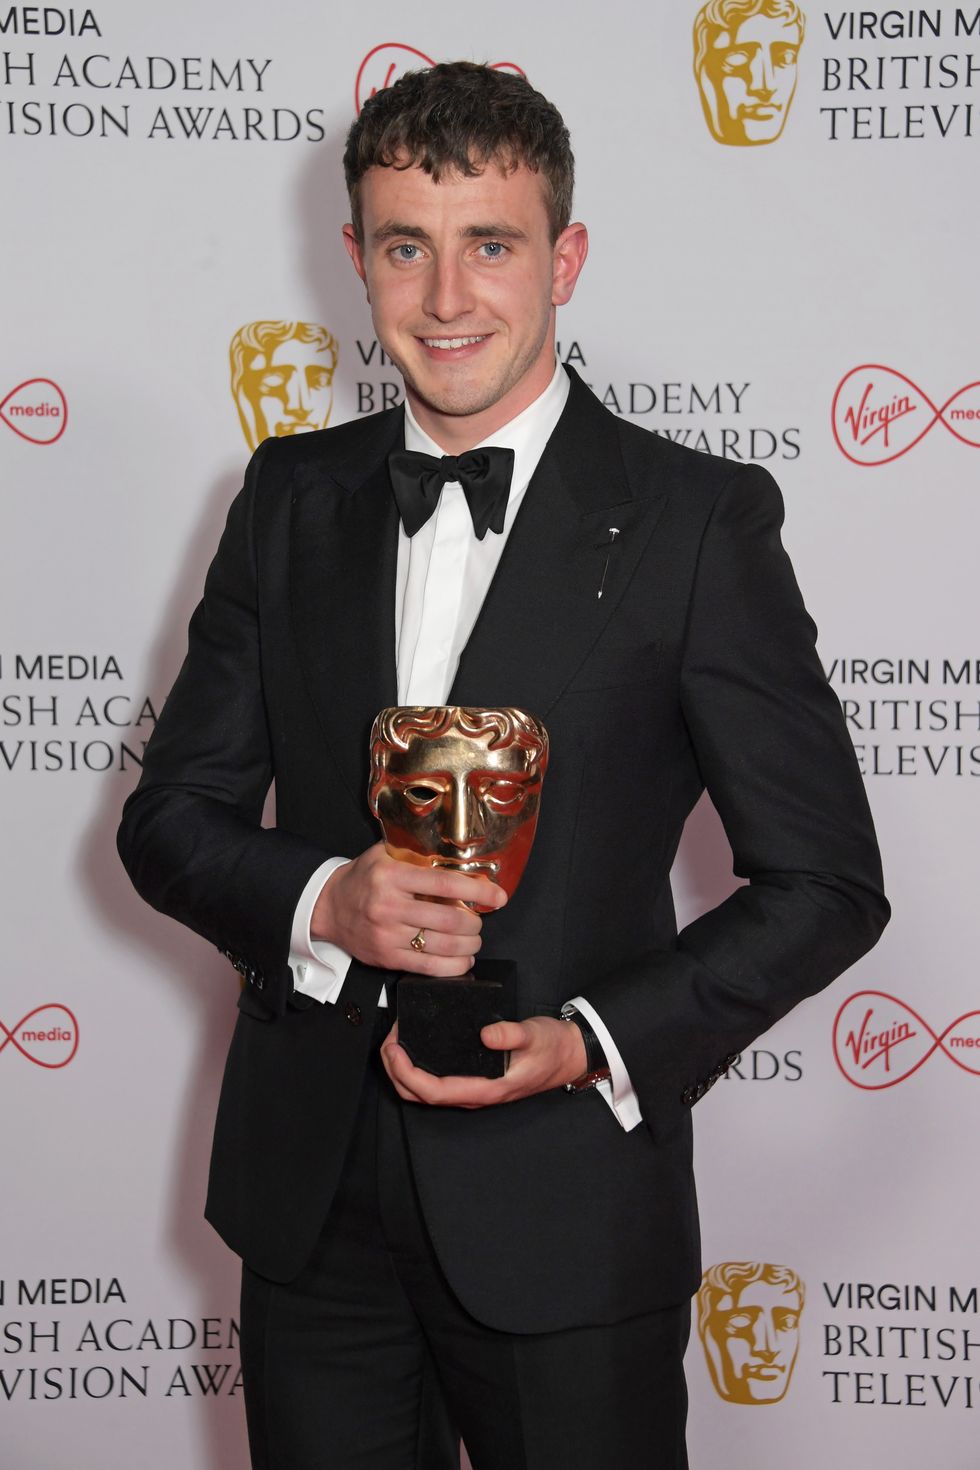 virgin media british academy television awards 2021   winners room